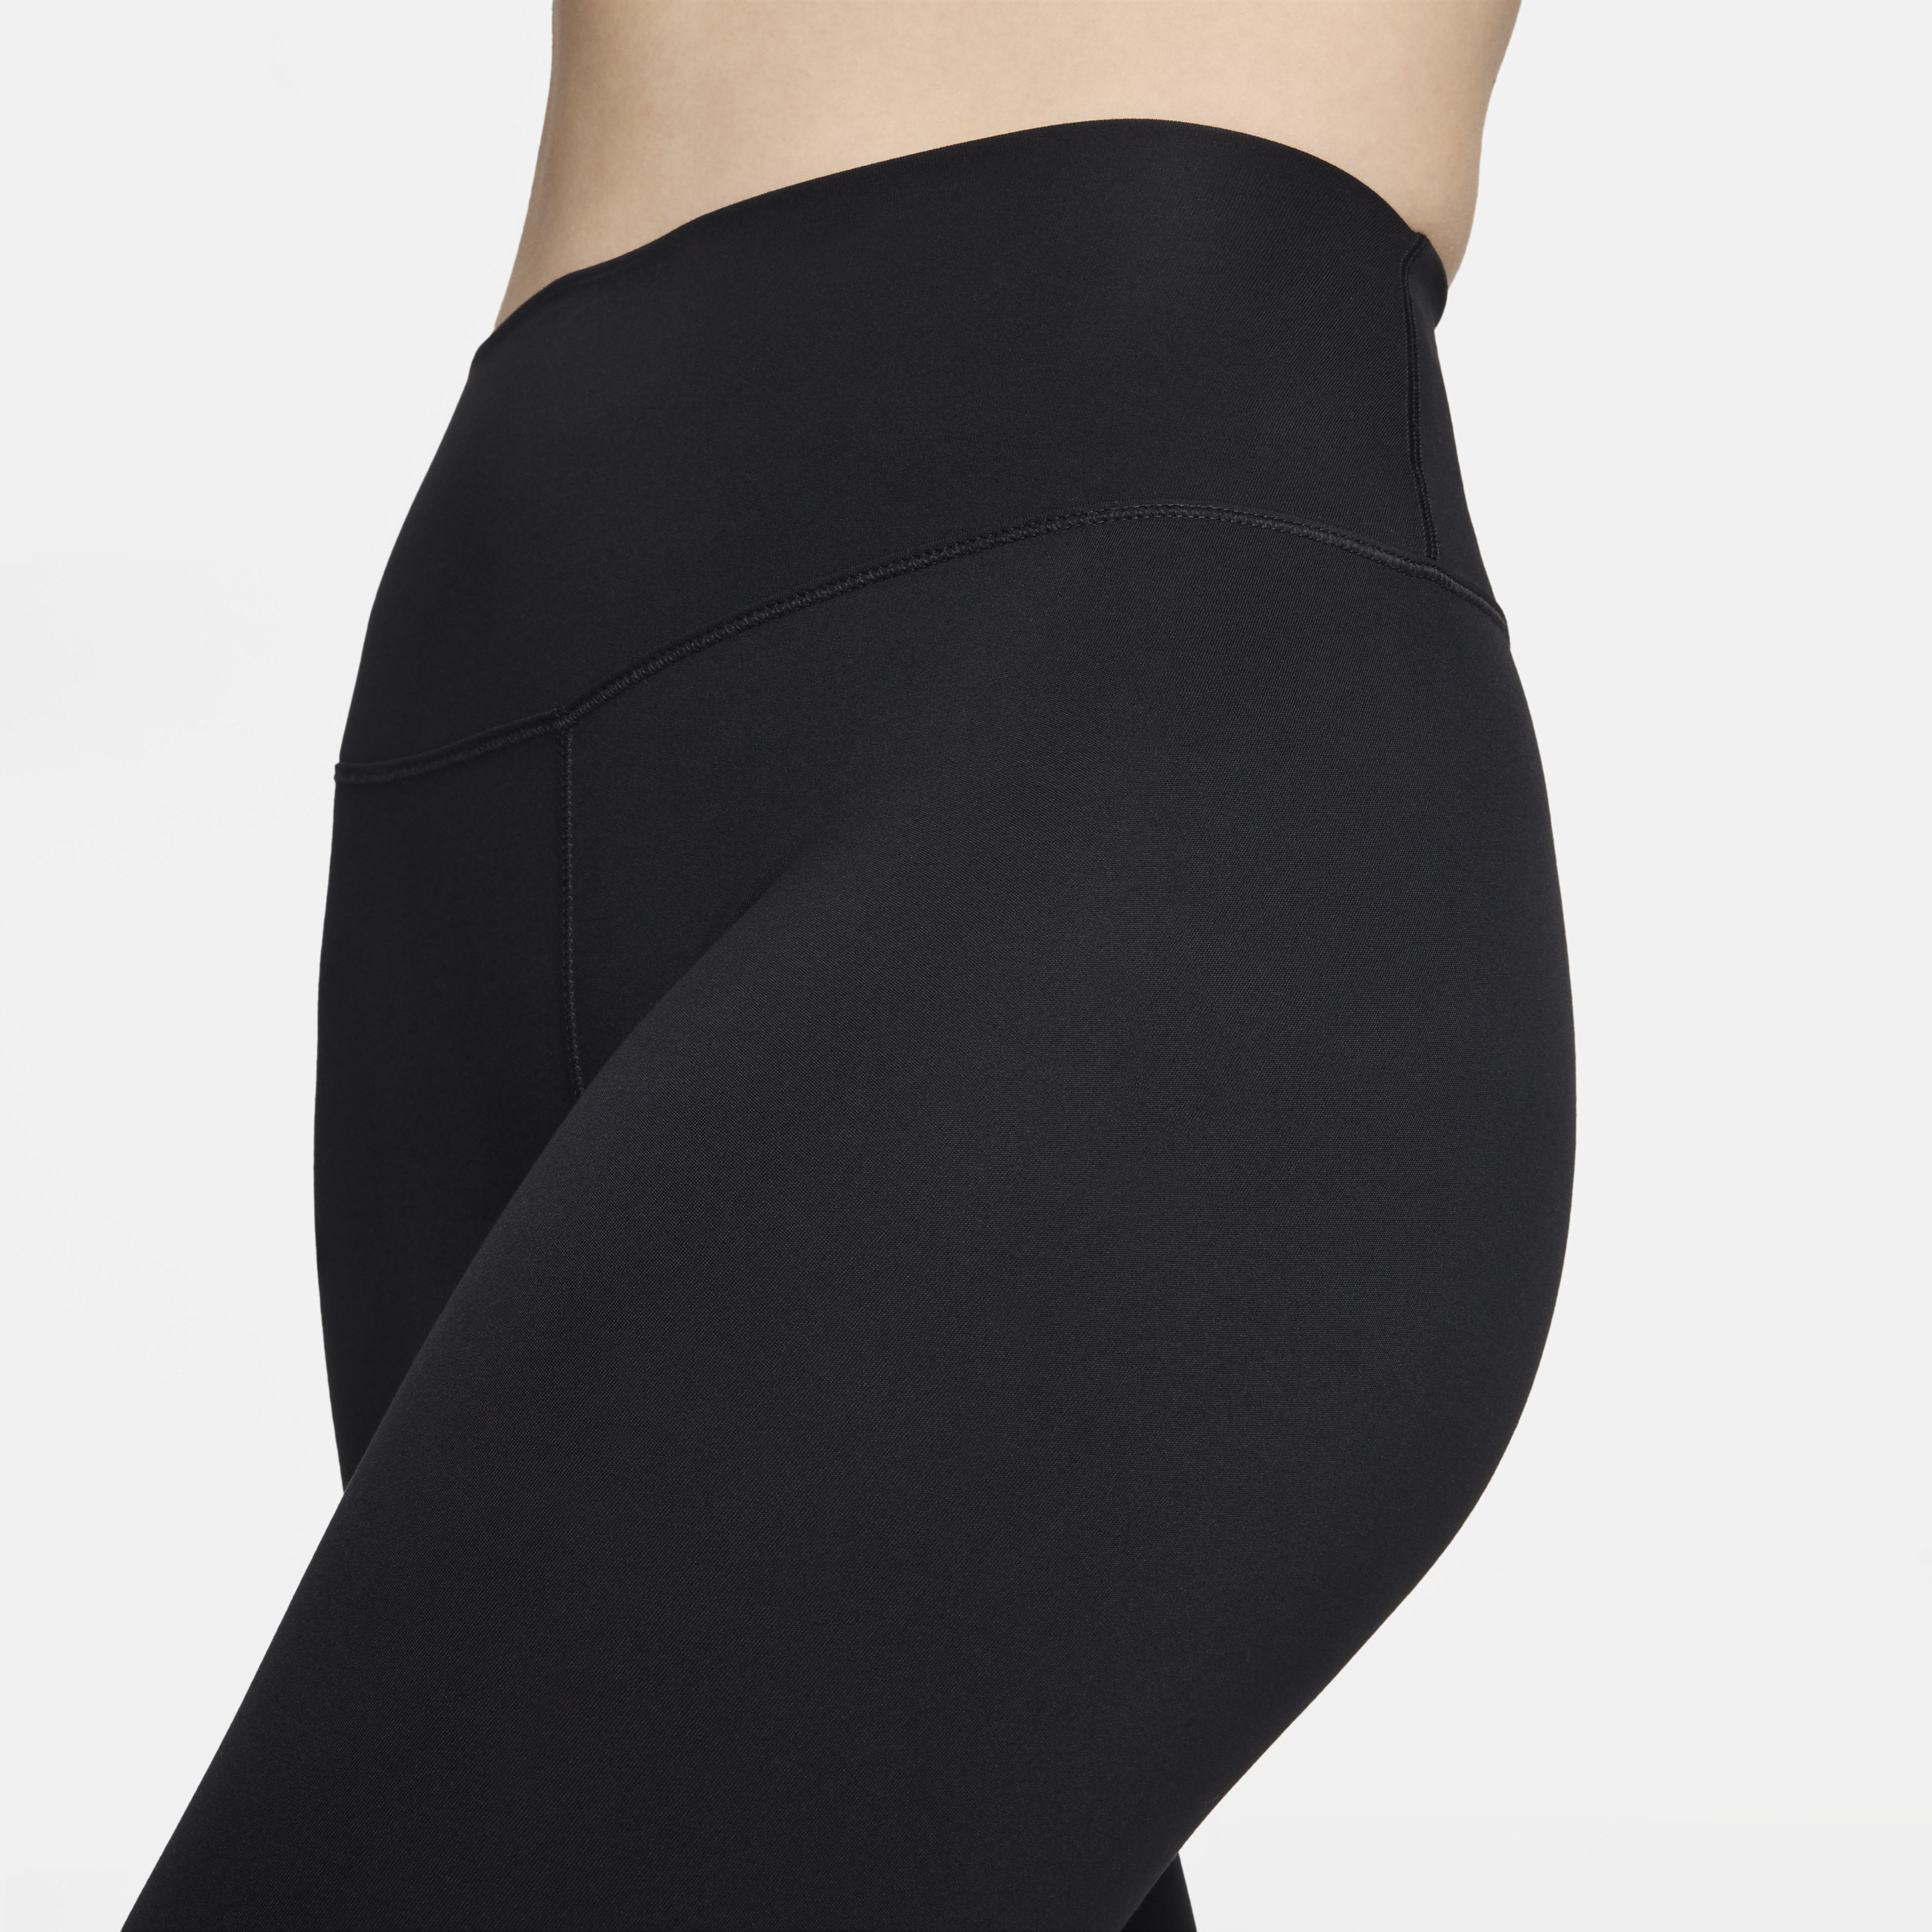 Nike One lange legging met hoge taille voor dames Zwart